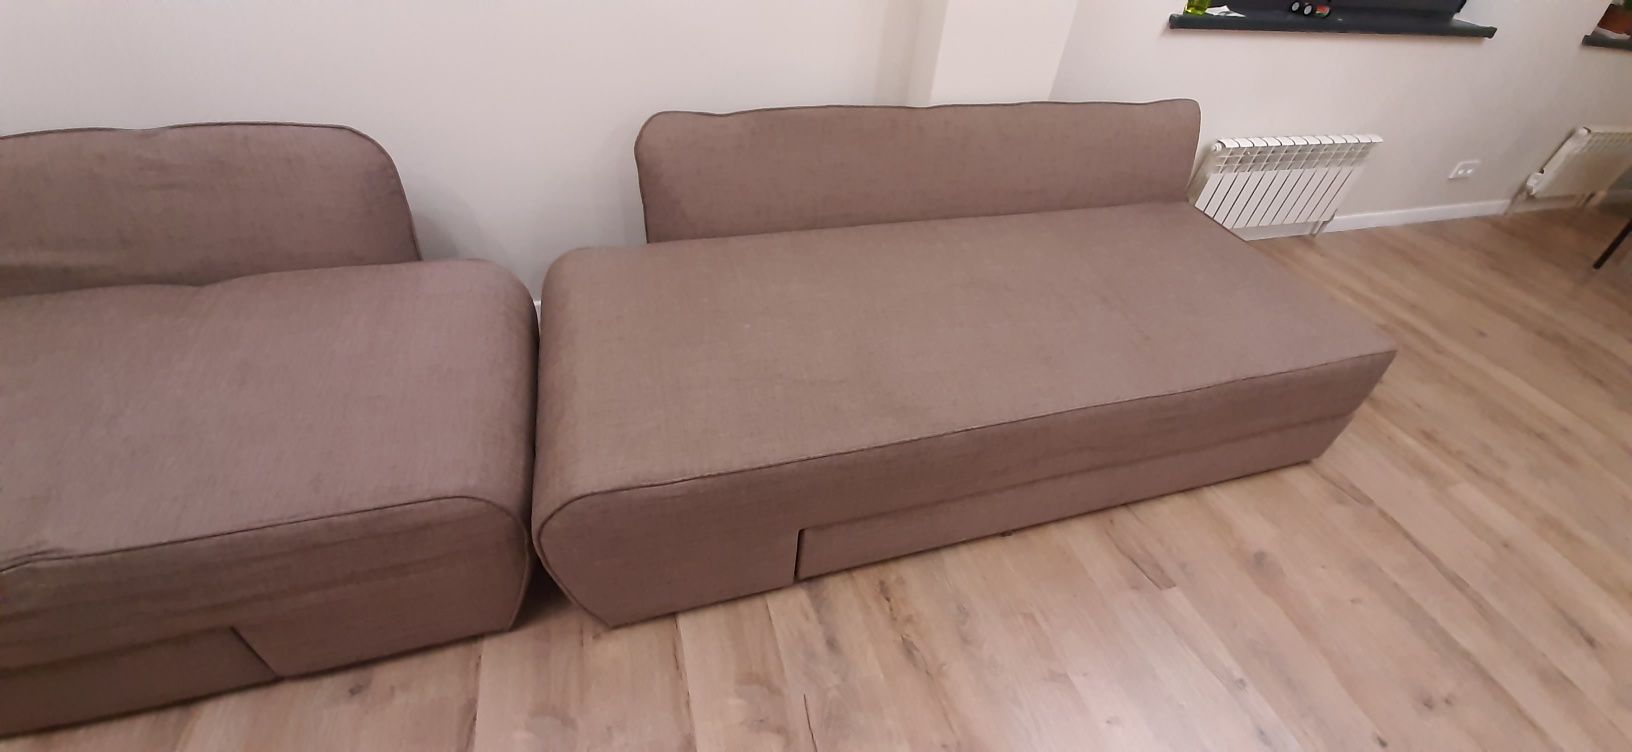 Угловой диван, францйзкий лен